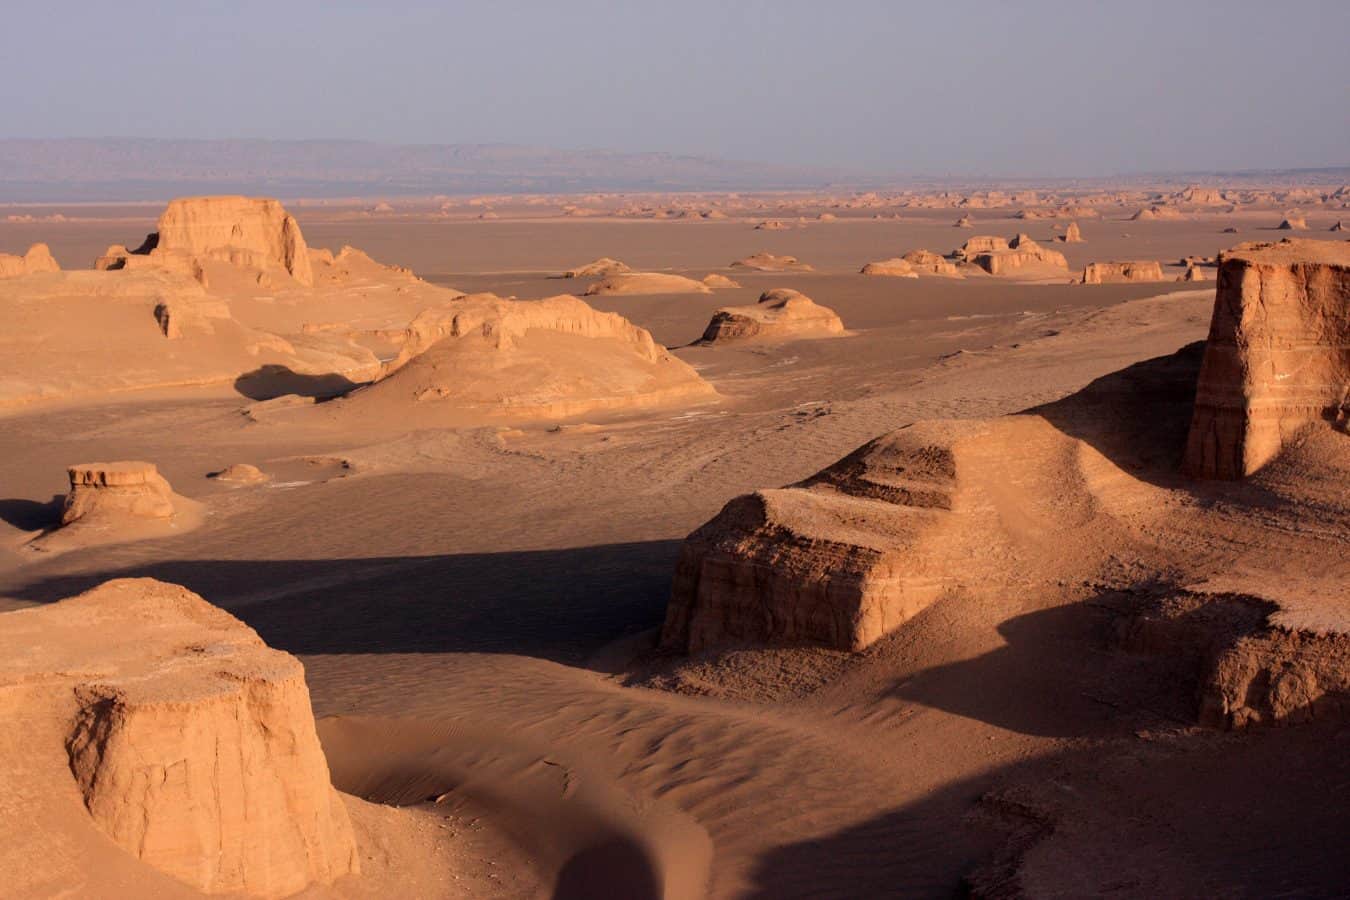 The iran Lut desert